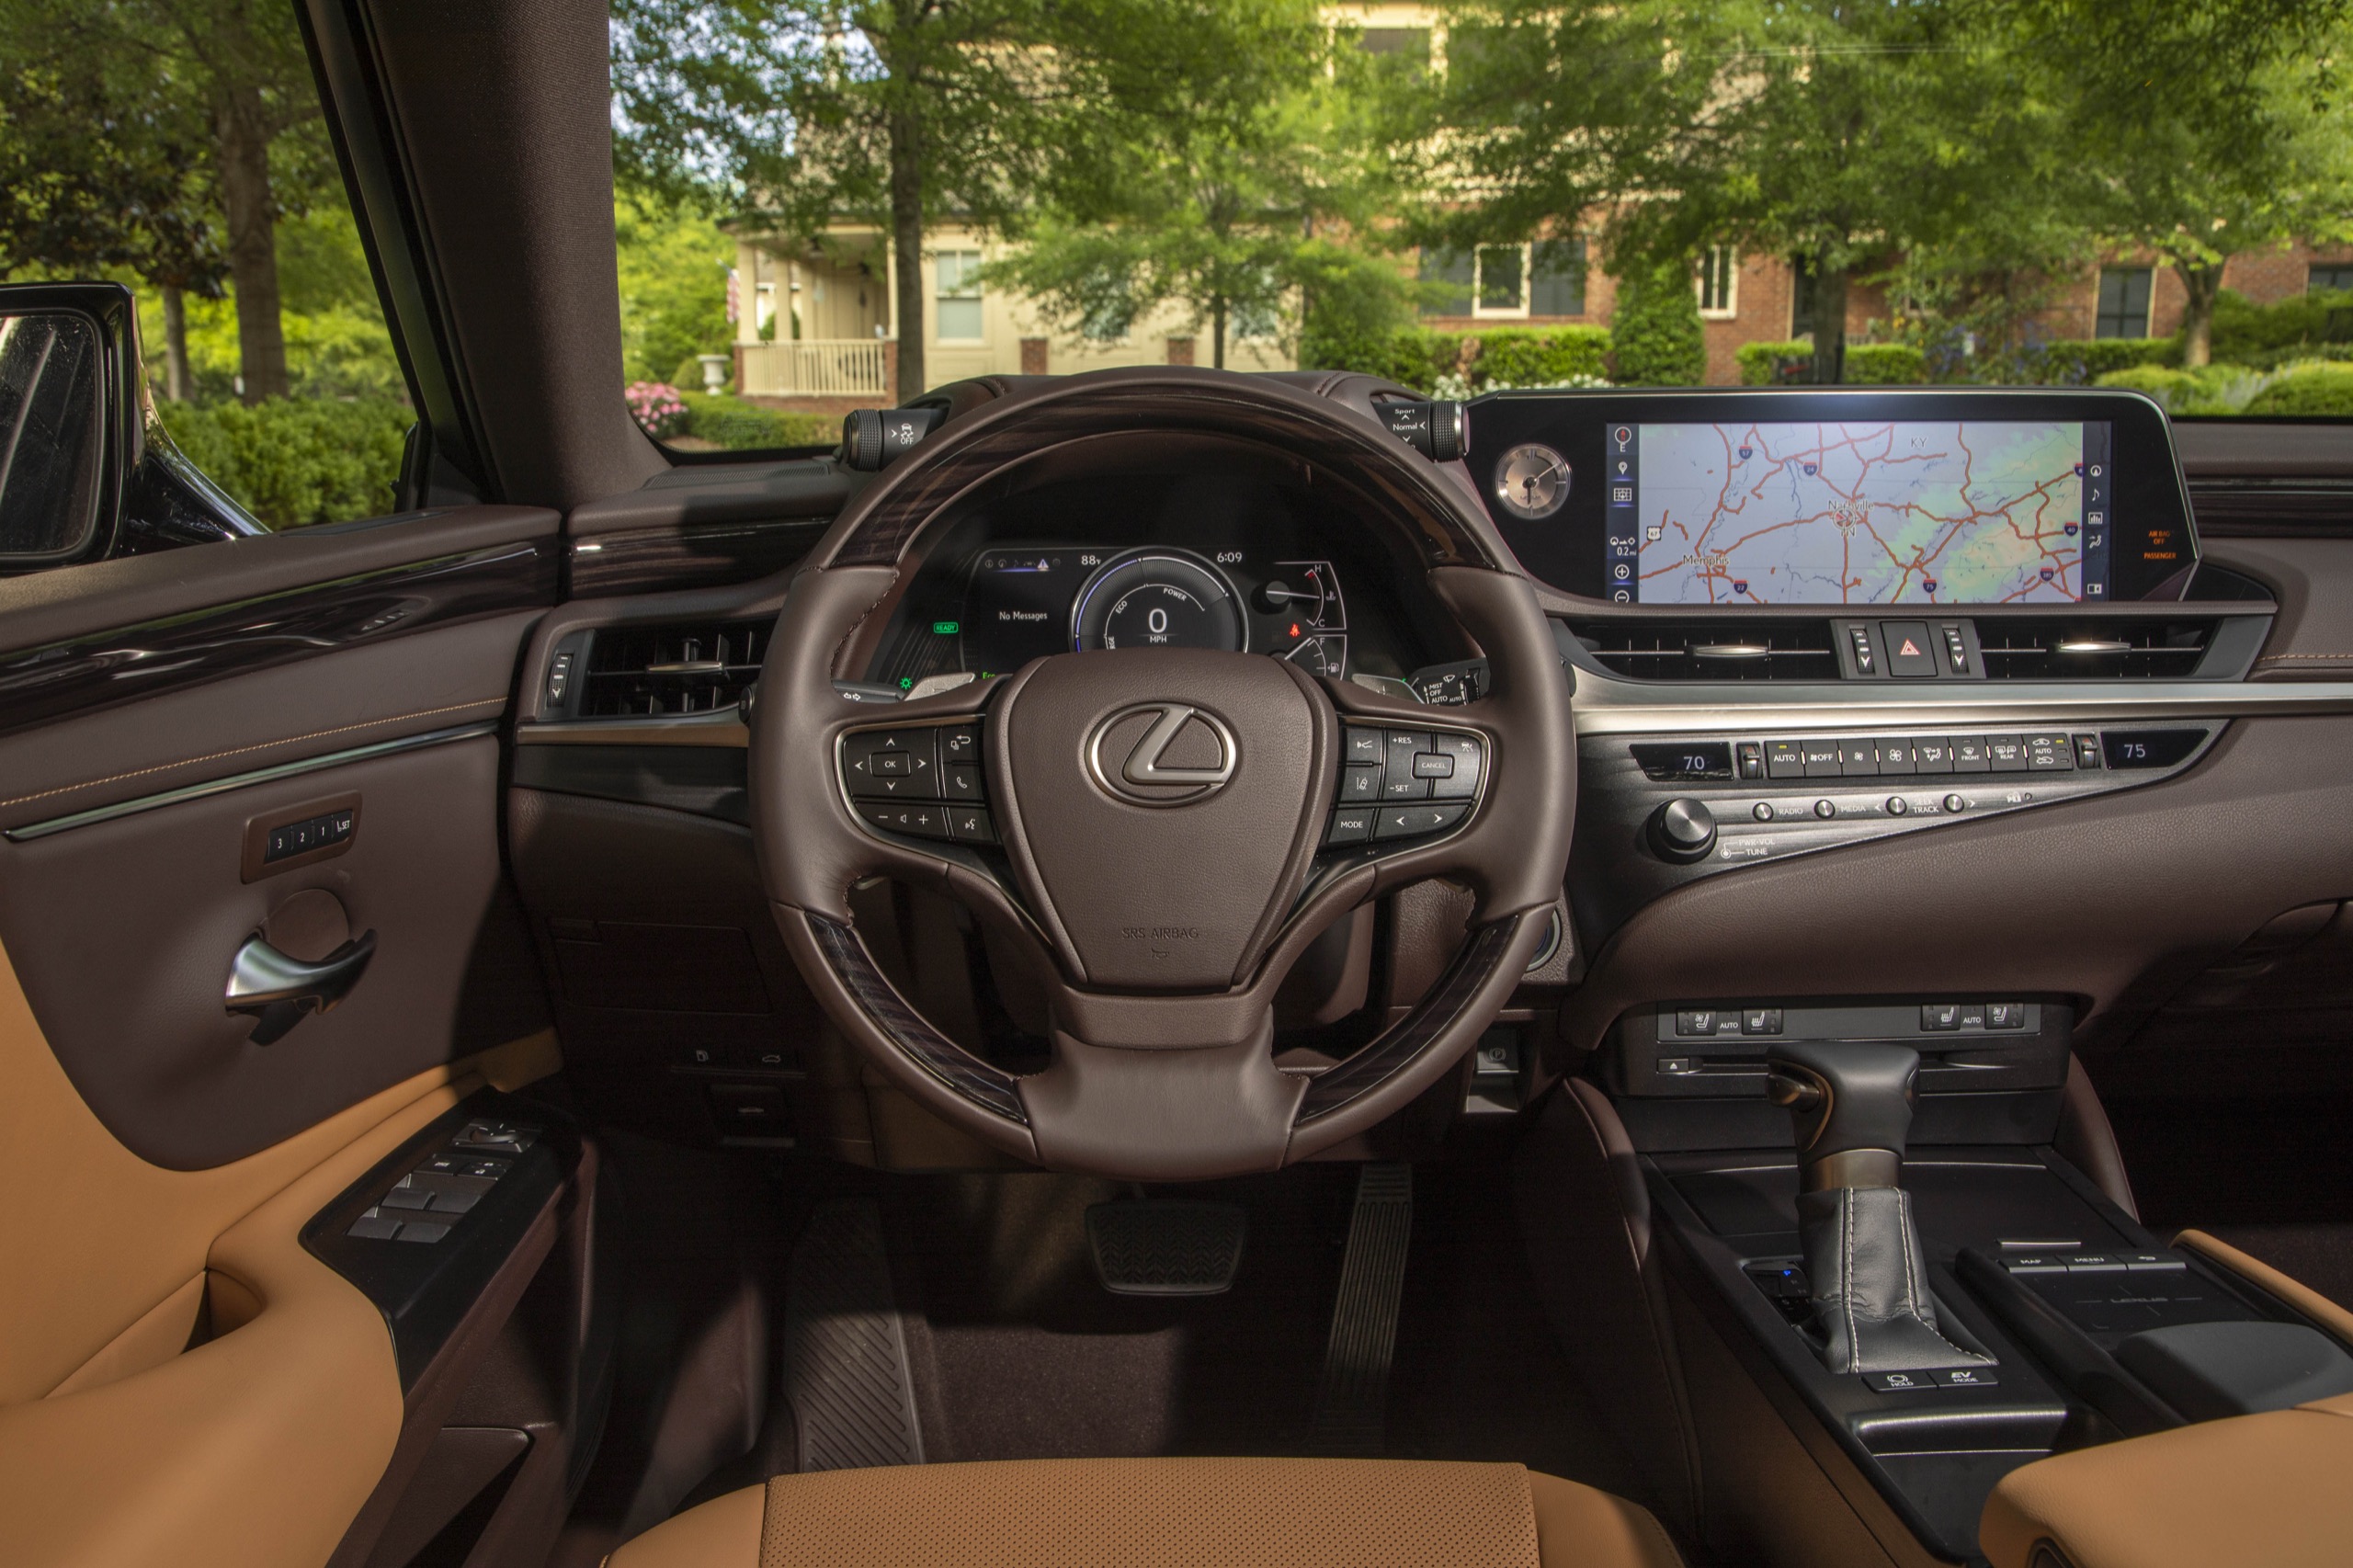 Photo Gallery Inside The 2019 Lexus Es Sedan Lexus Enthusiast